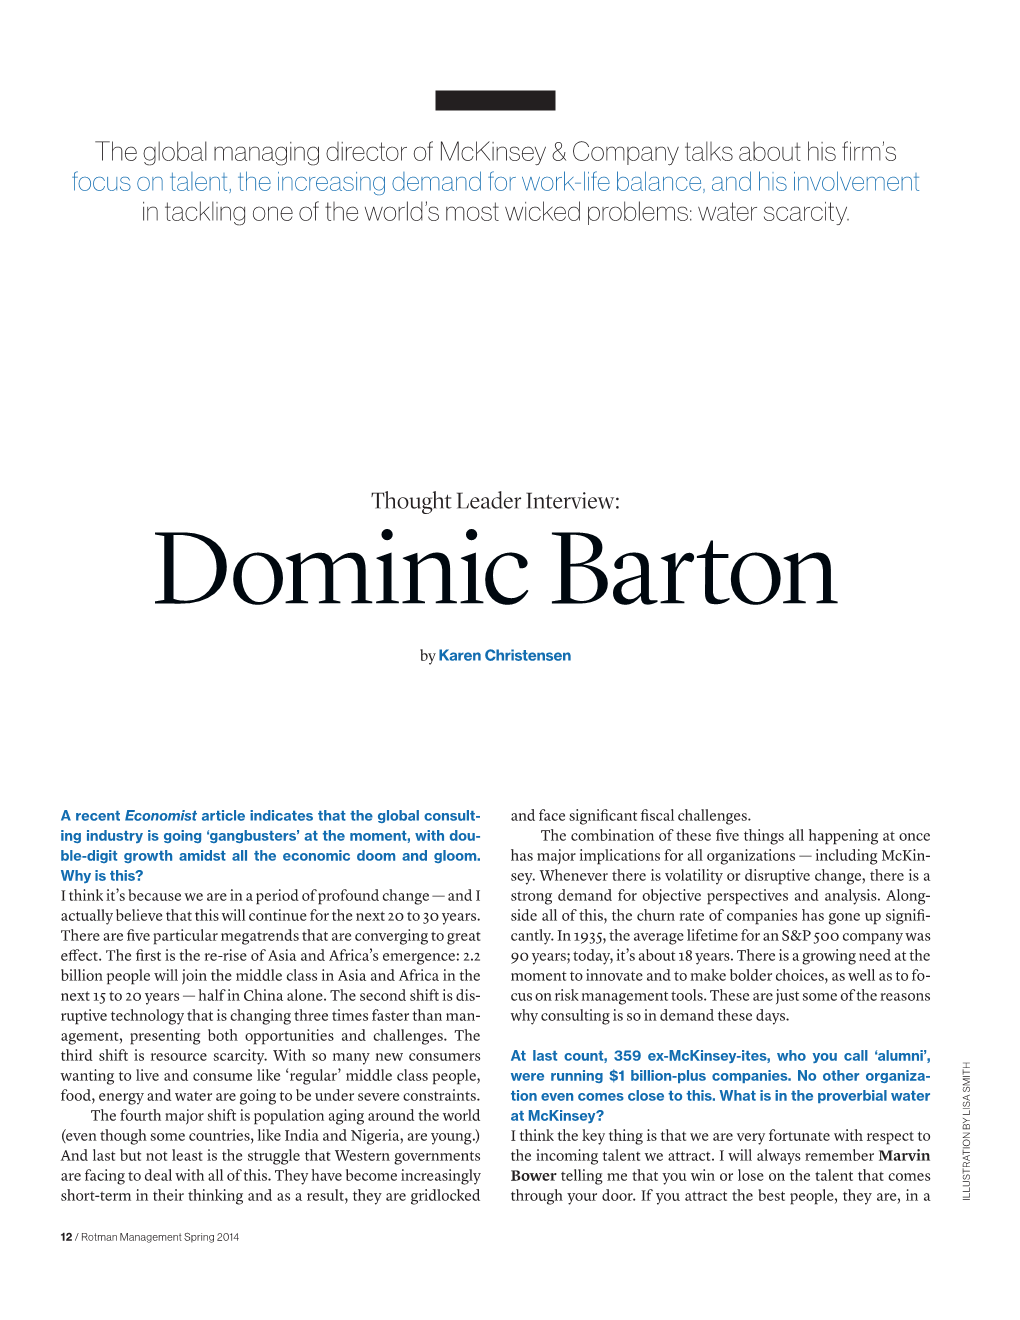 Dominic Barton